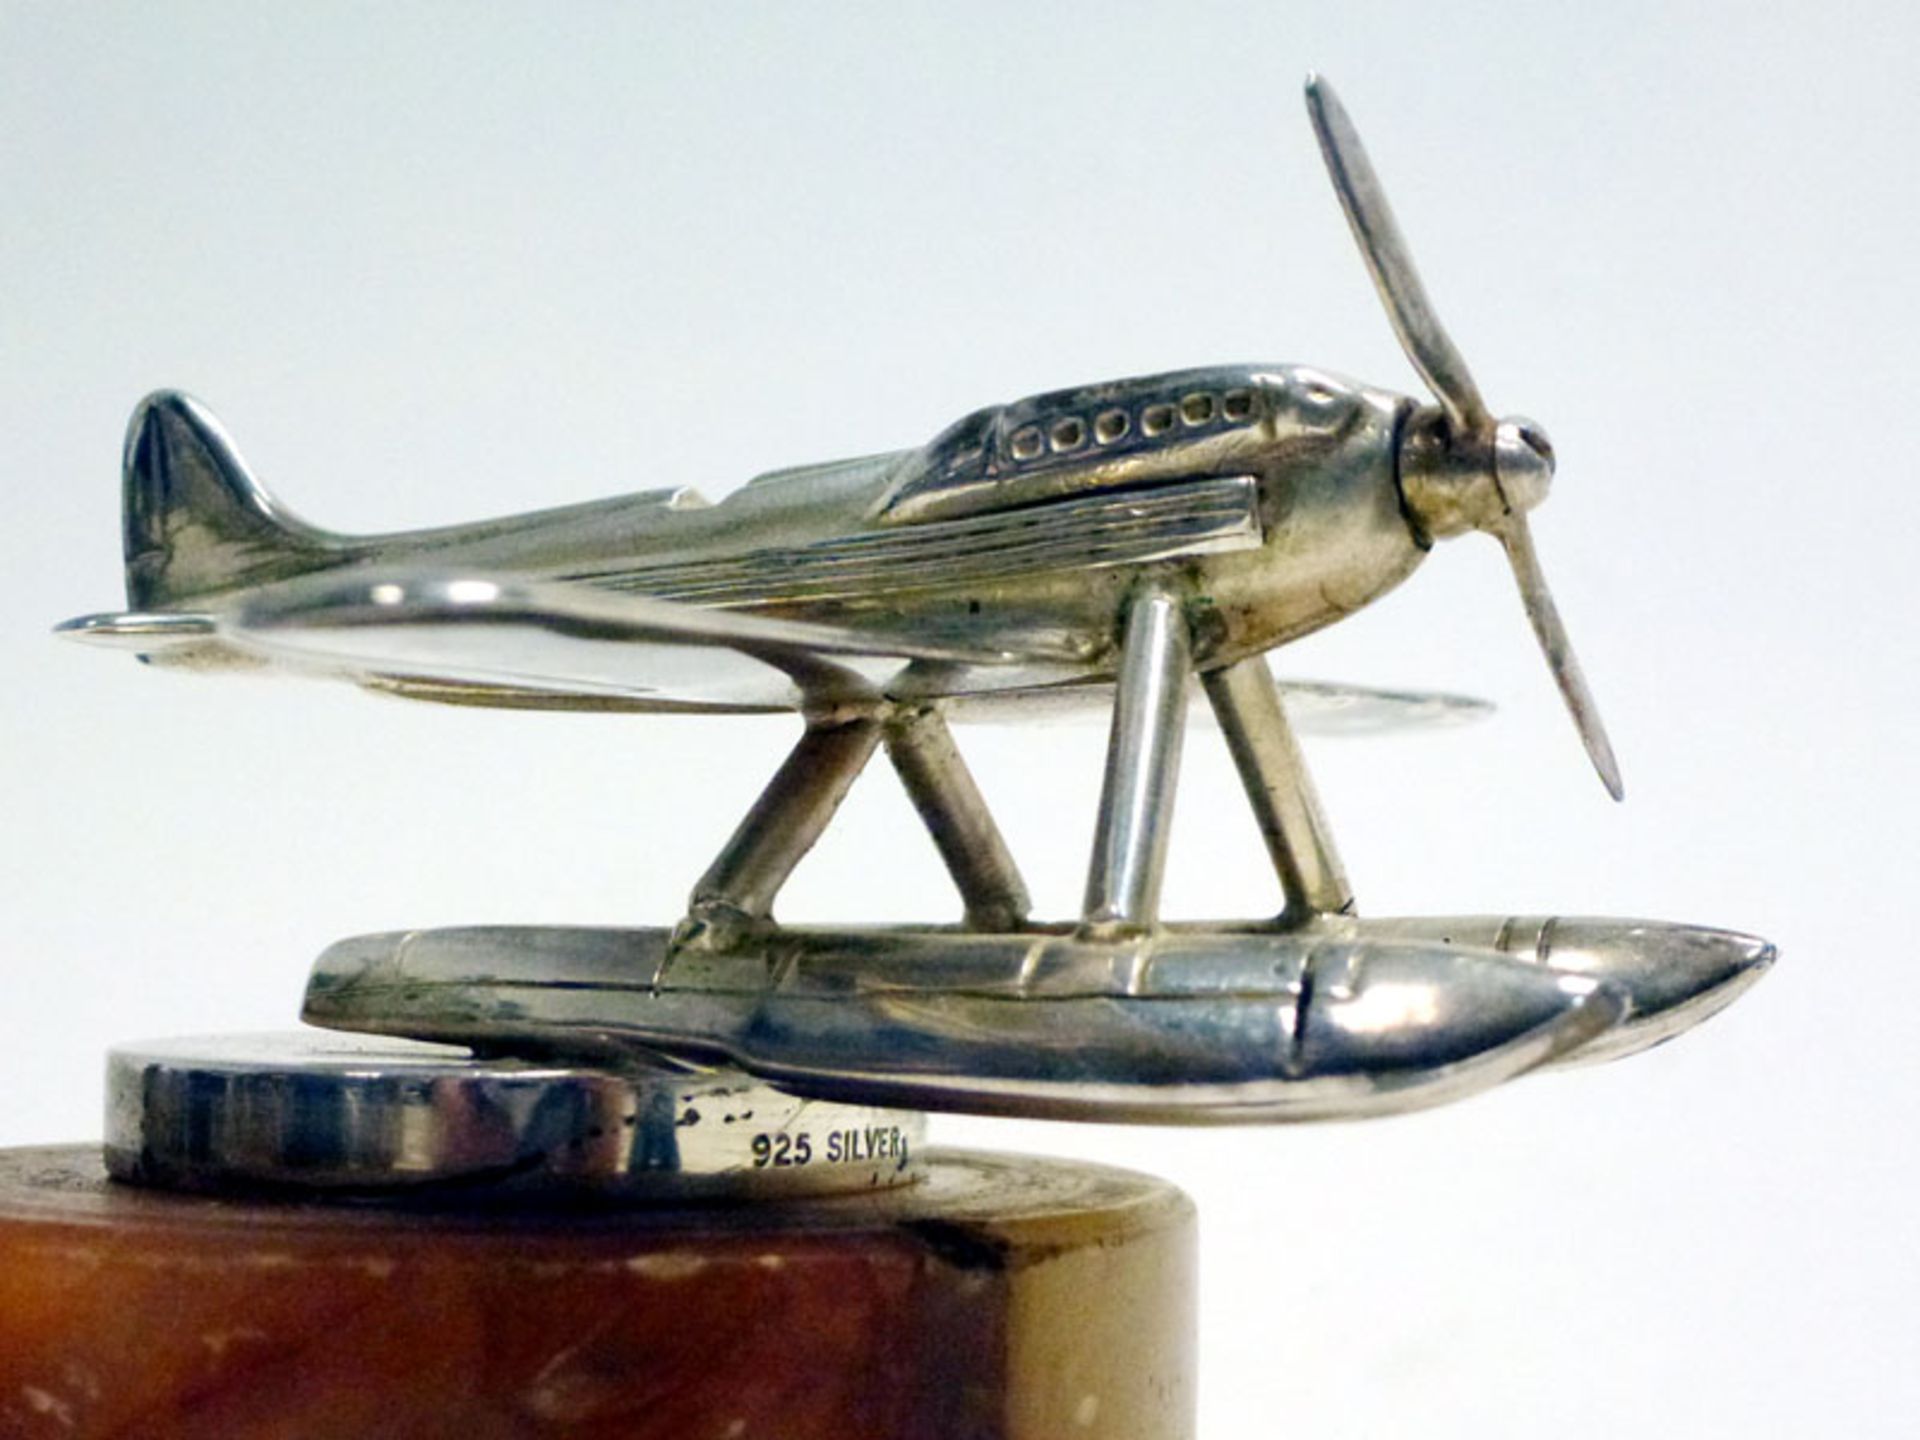 Rolls-Royce Schneider Seaplane Mascot (Solid Silver) - Image 2 of 3